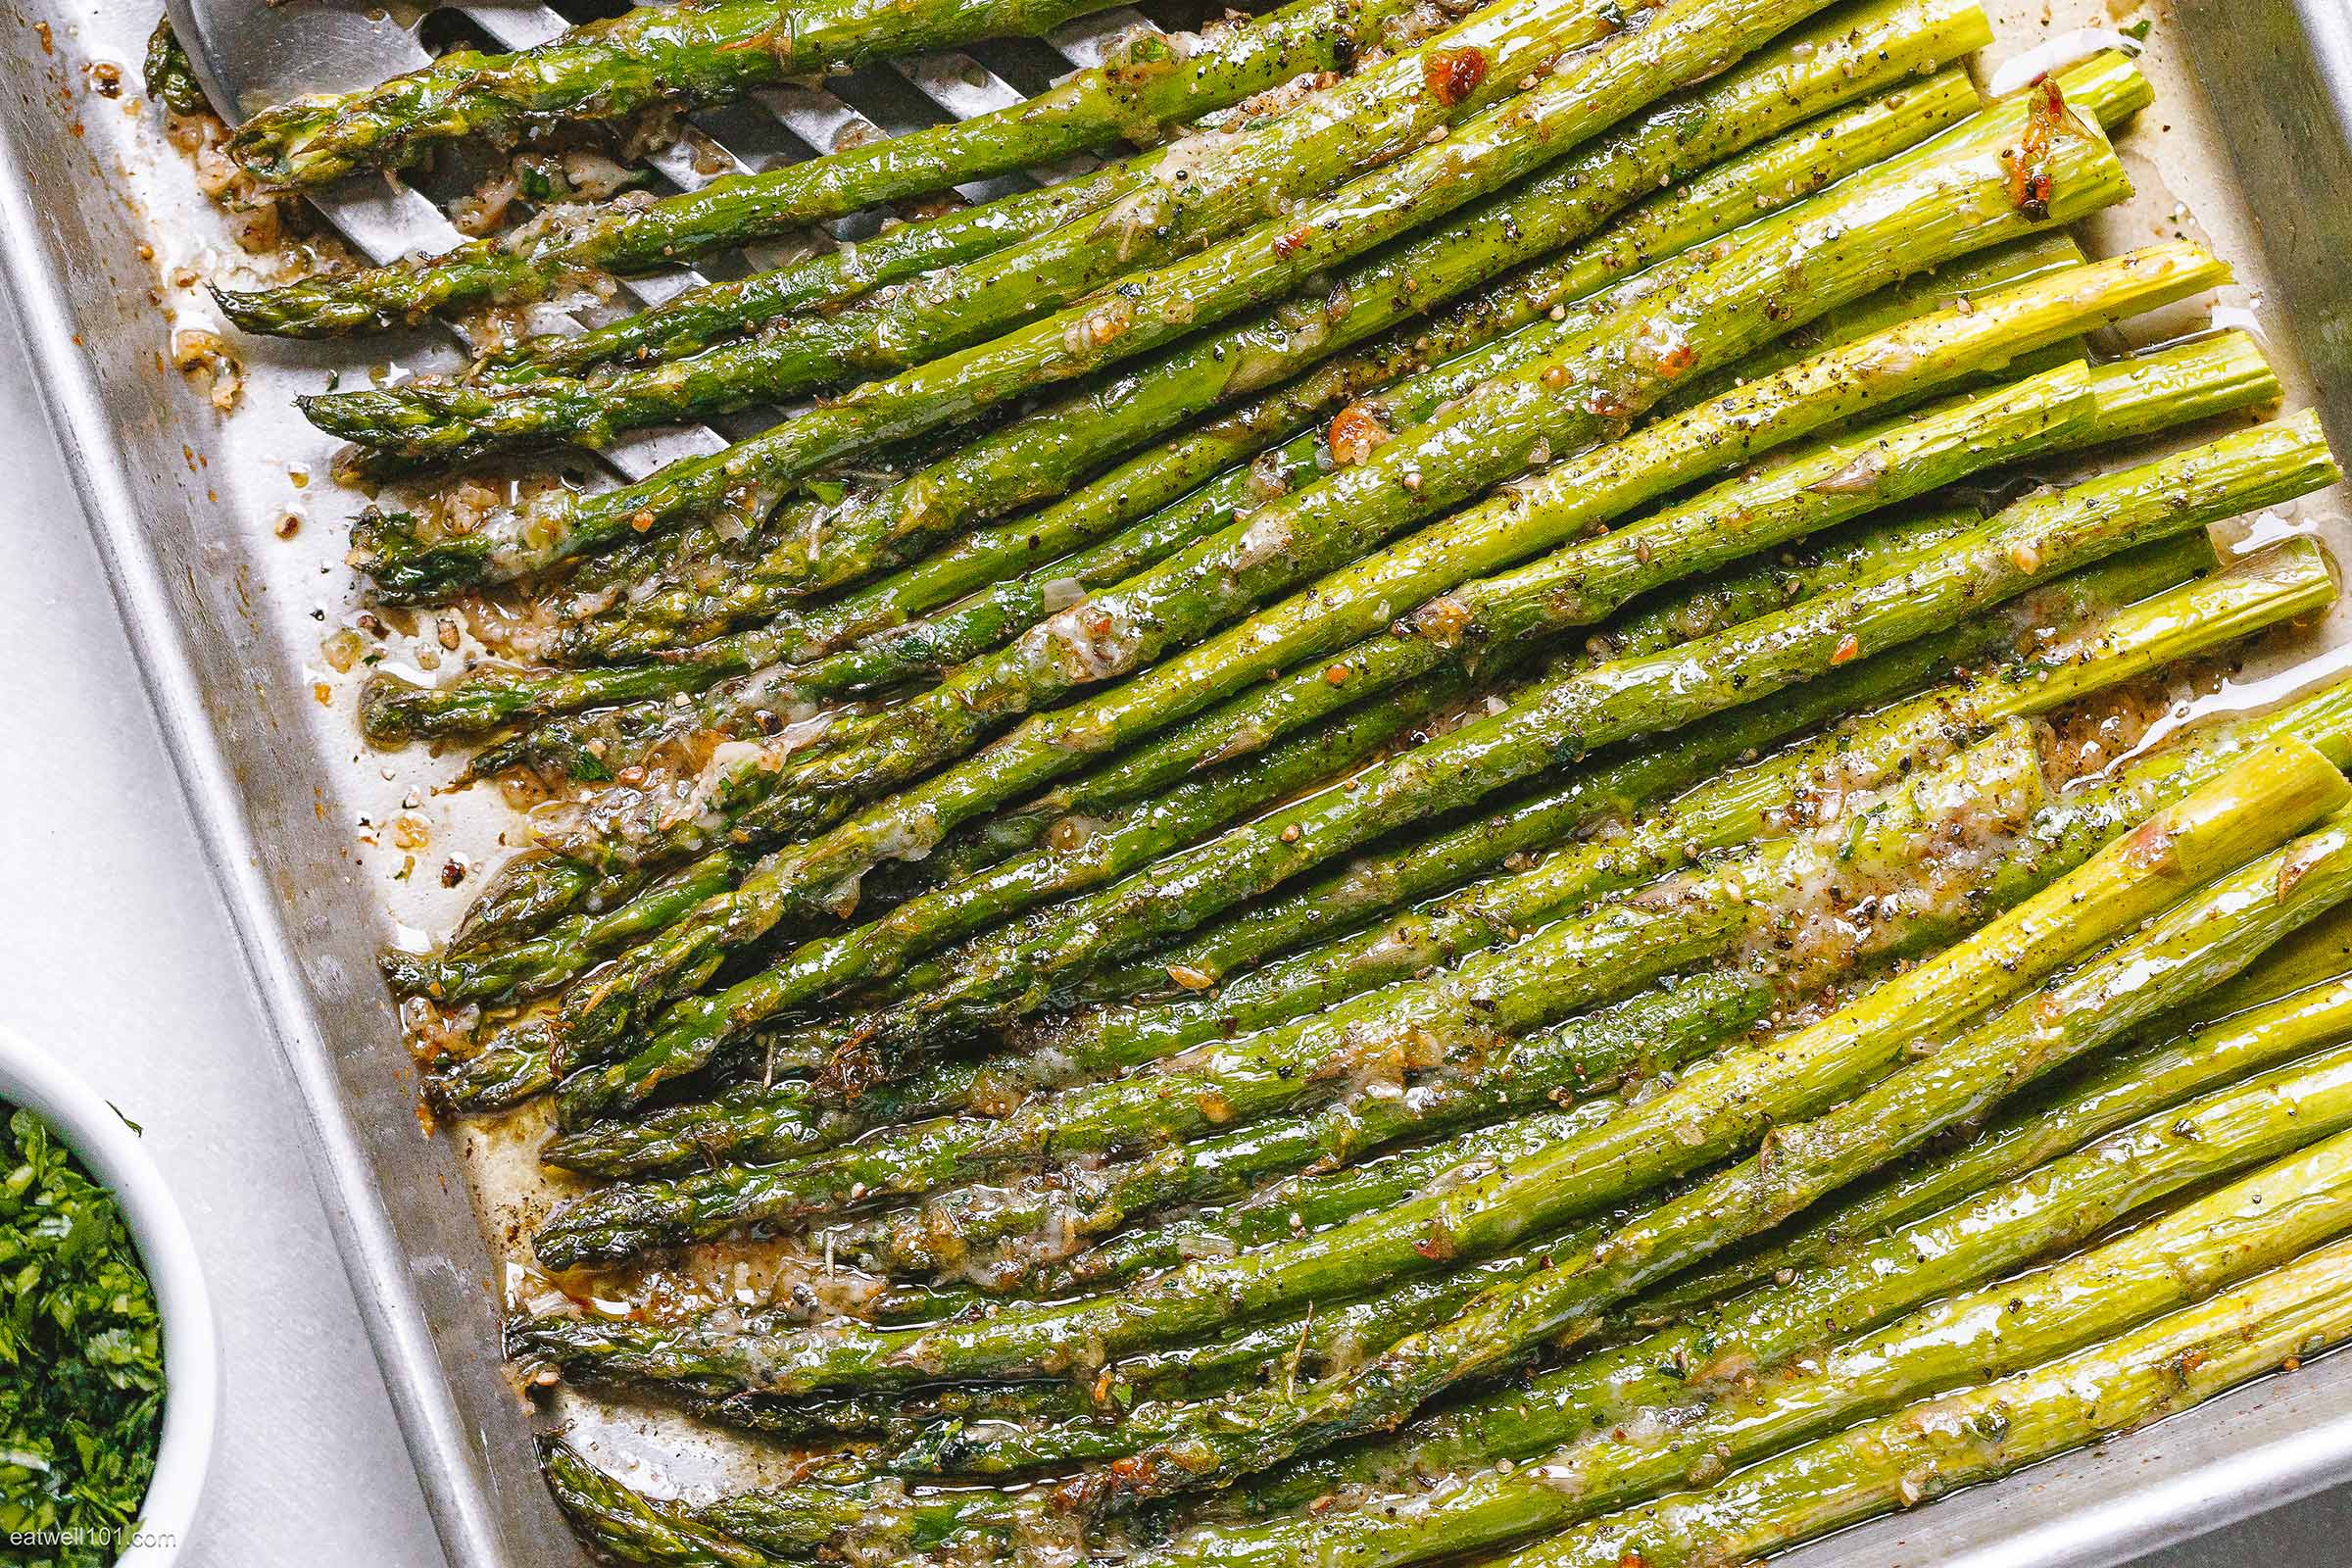 Top 3 Baked Asparagus Recipes